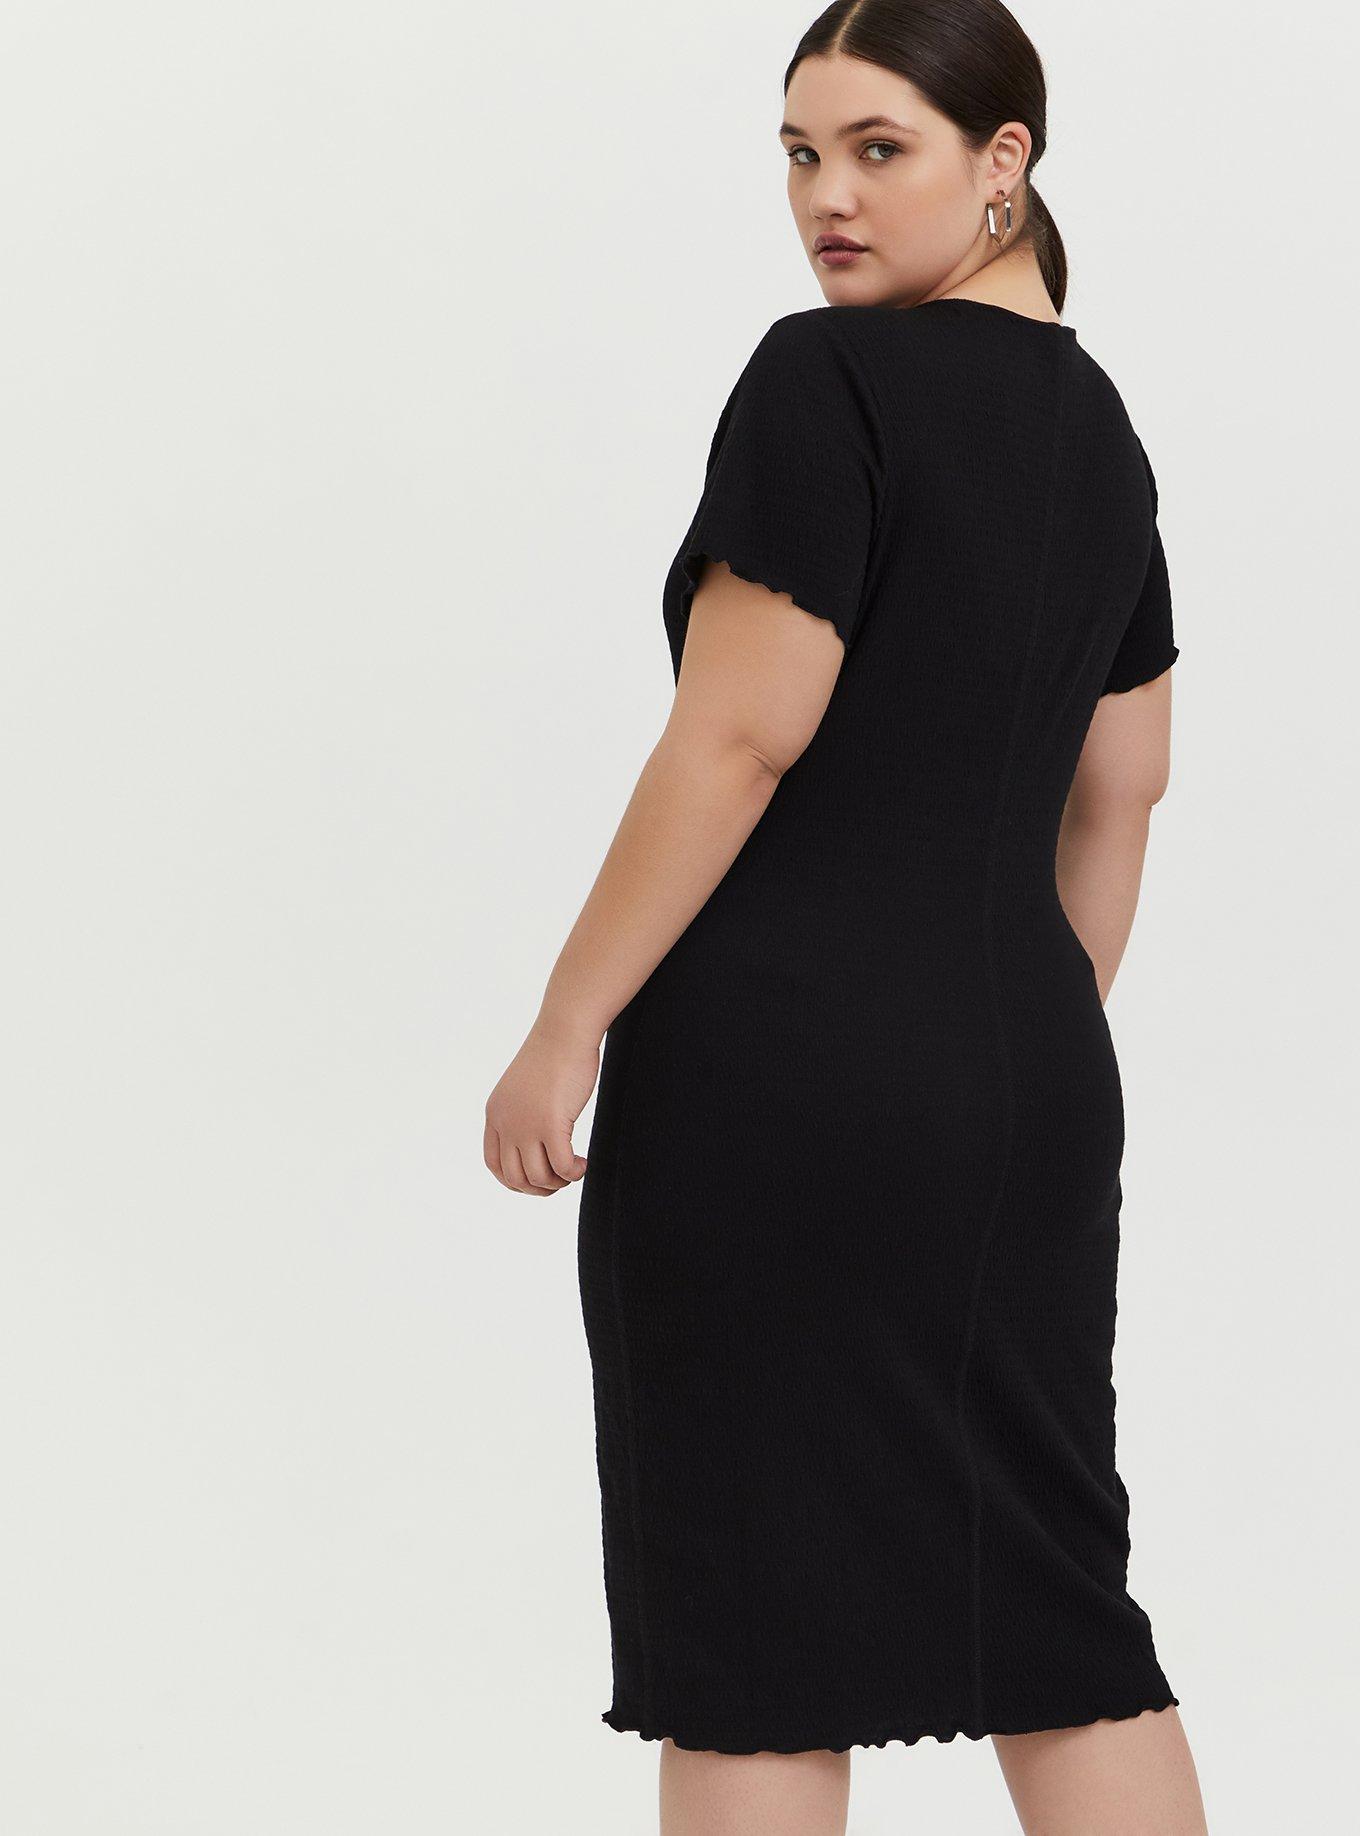 Plus Size - Black Smocked Bodycon Dress - Torrid